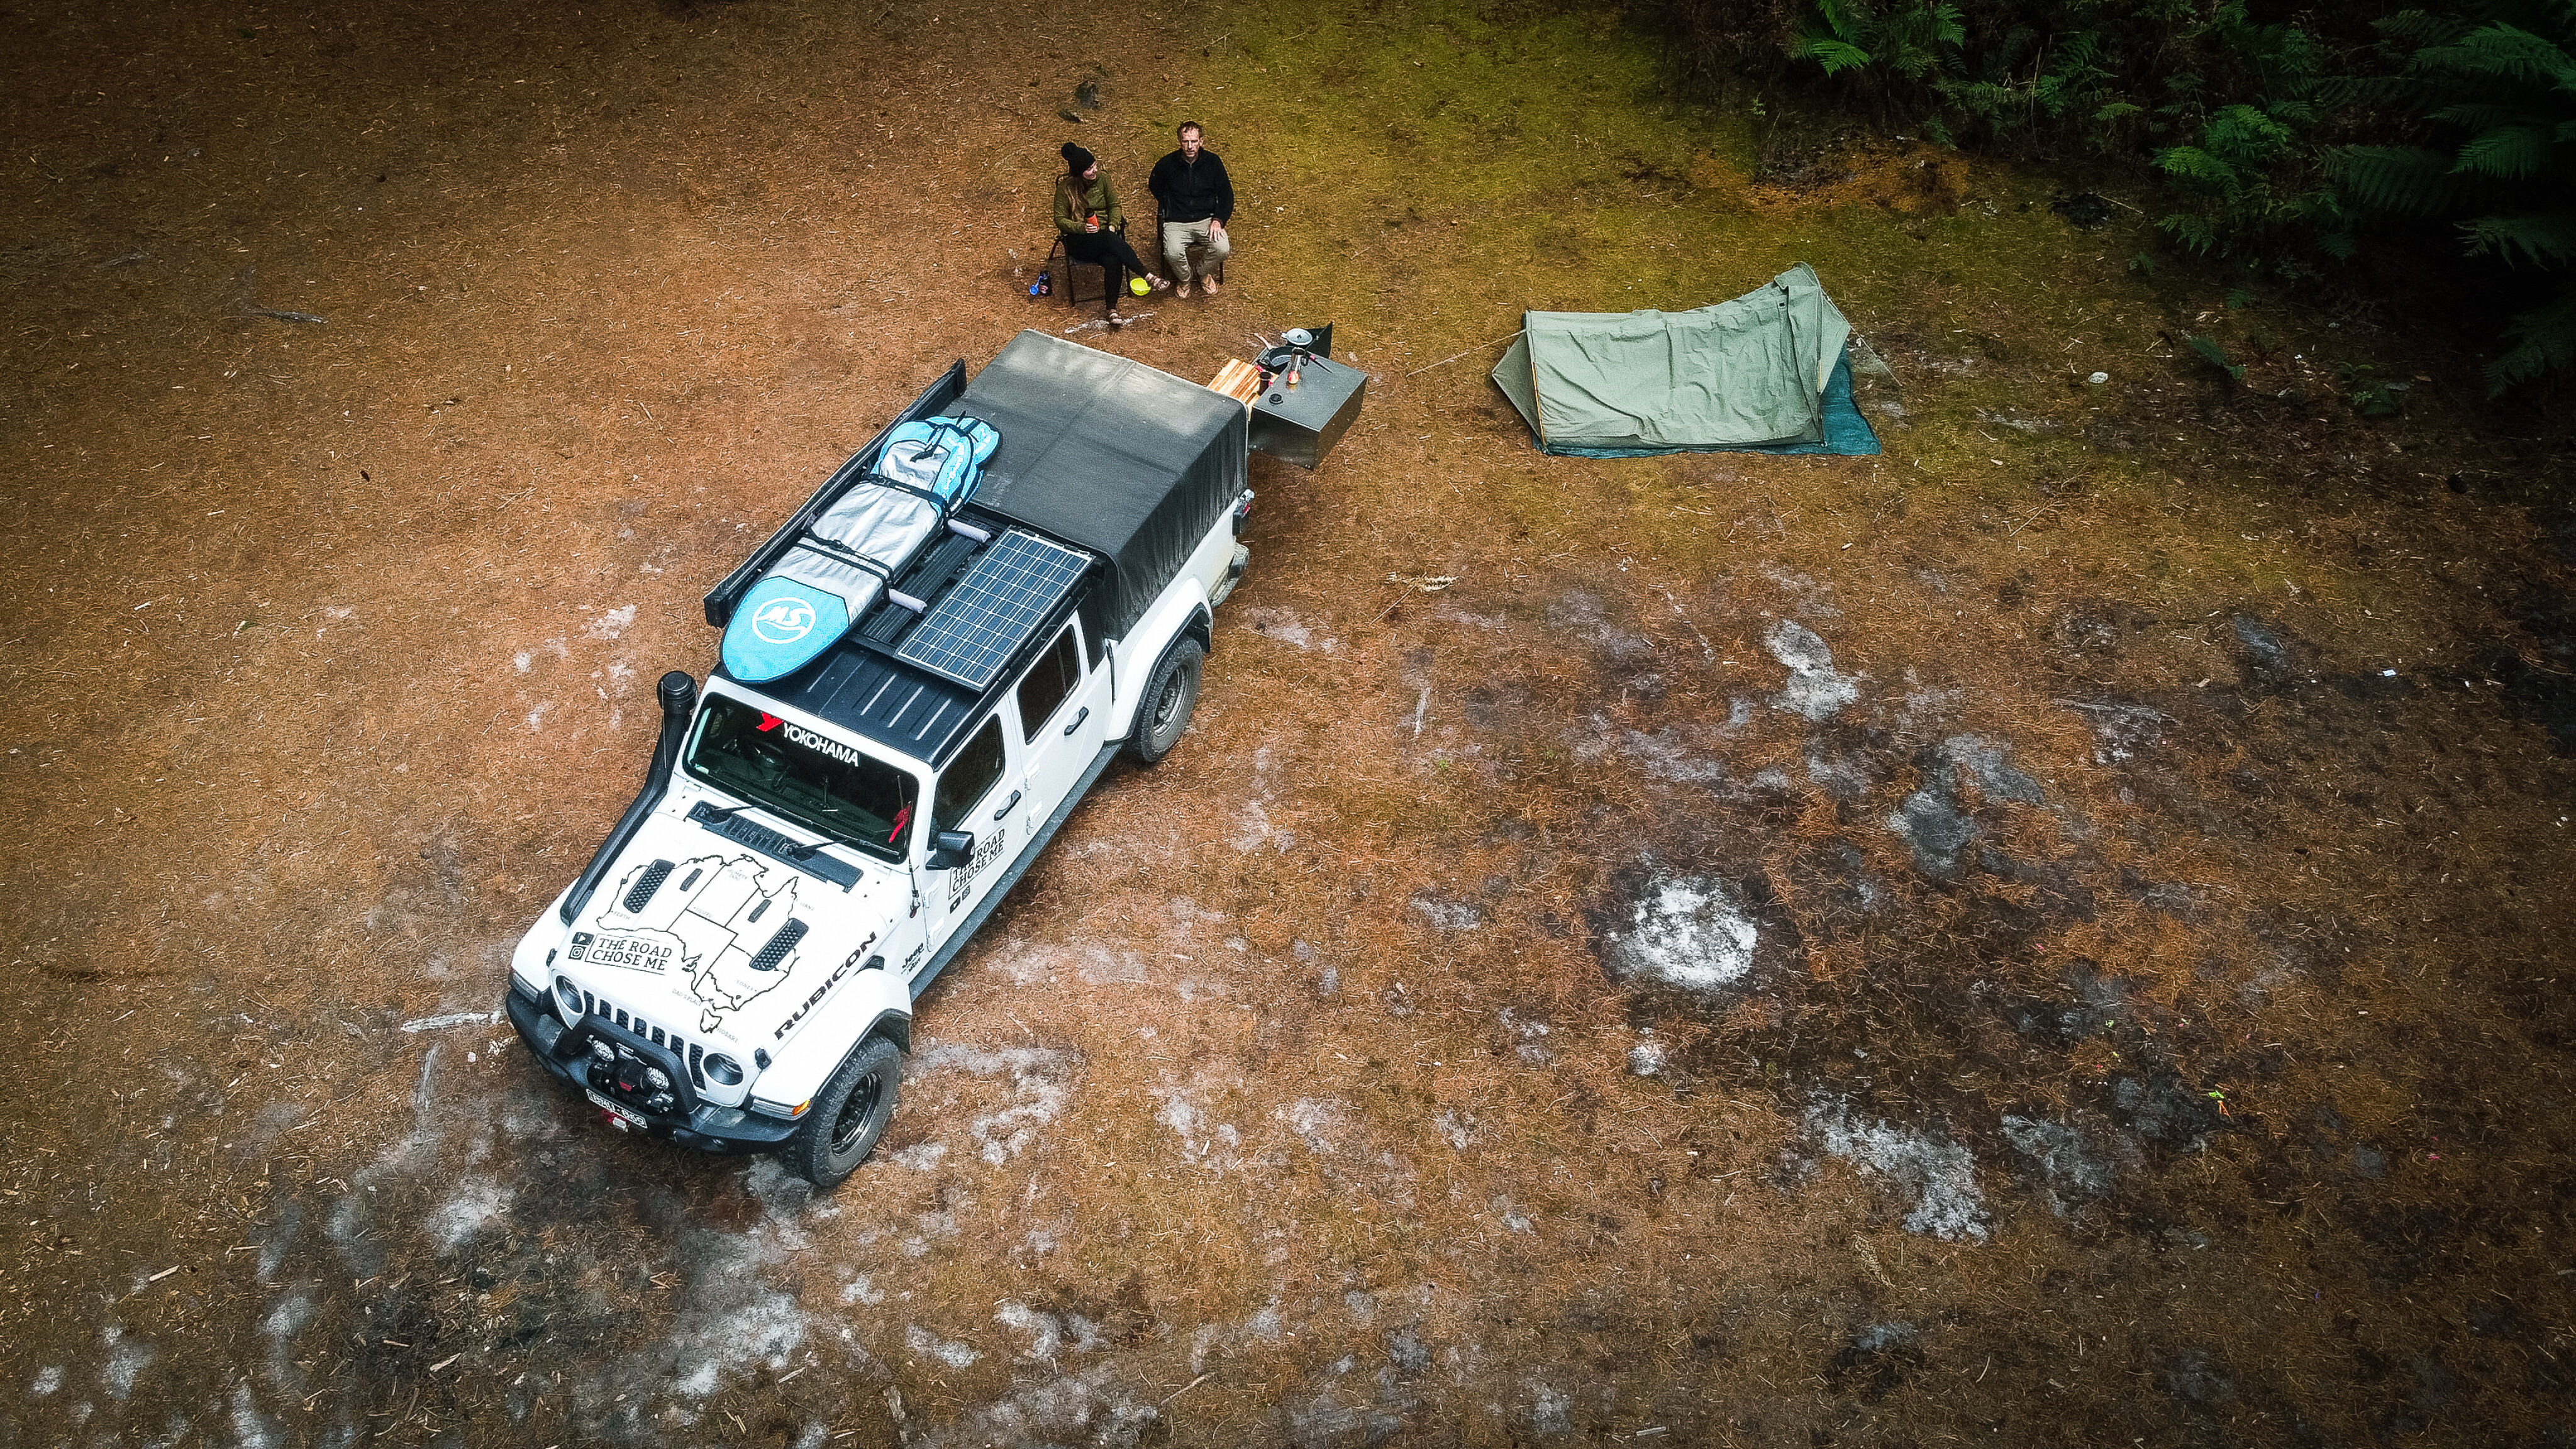 49af1b0e/camping from above 4x4 australia explore tasmania jpg